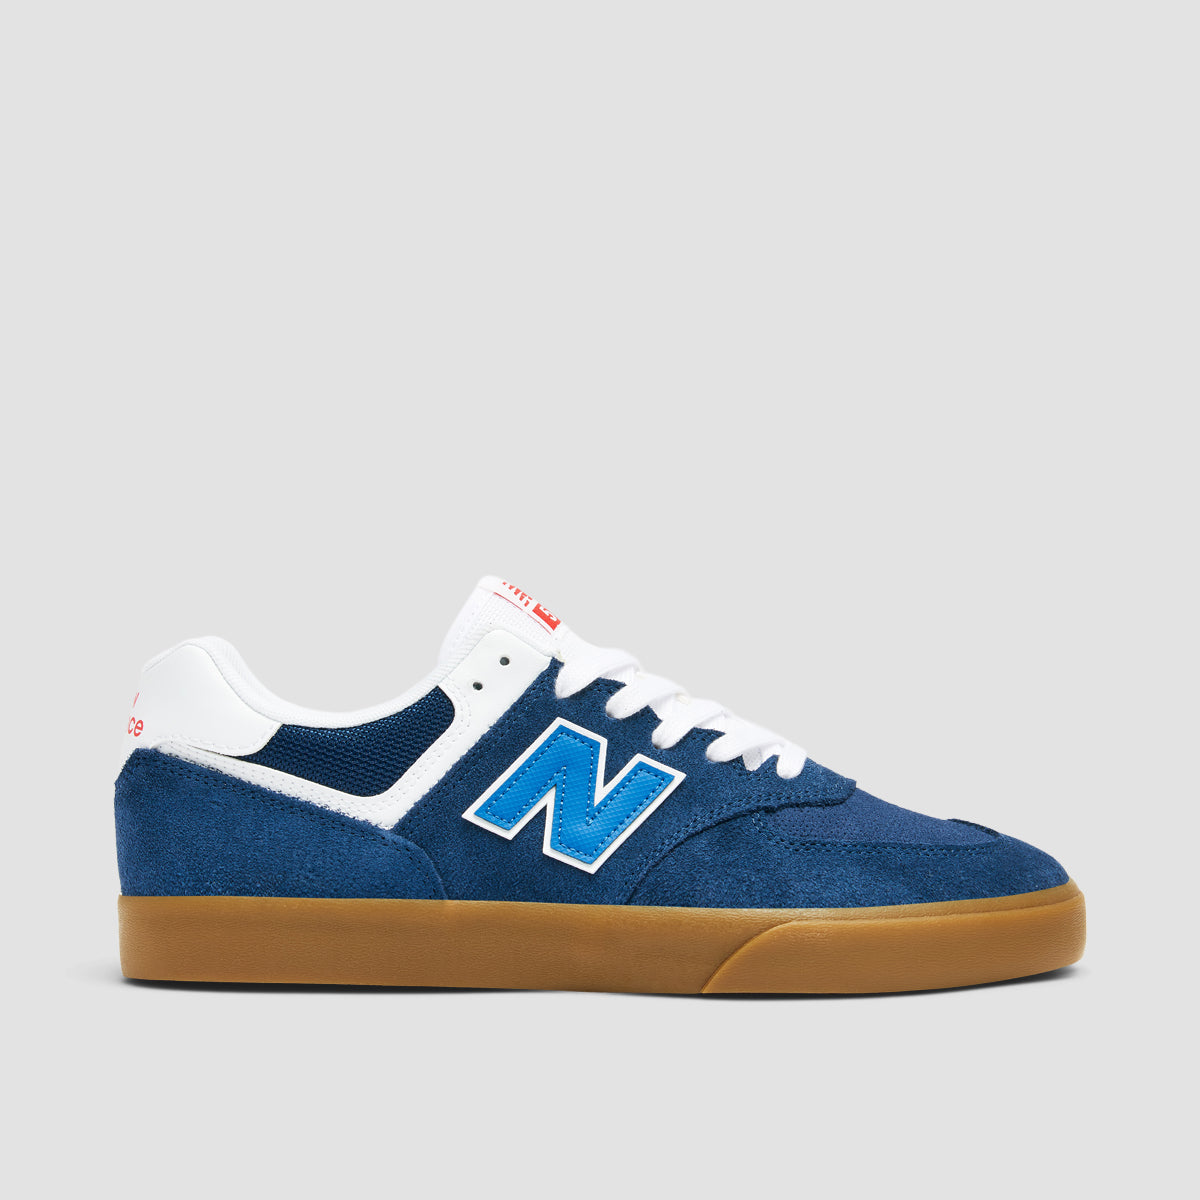 New Balance Numeric 574 Vulc Shoes - NB Navy/White